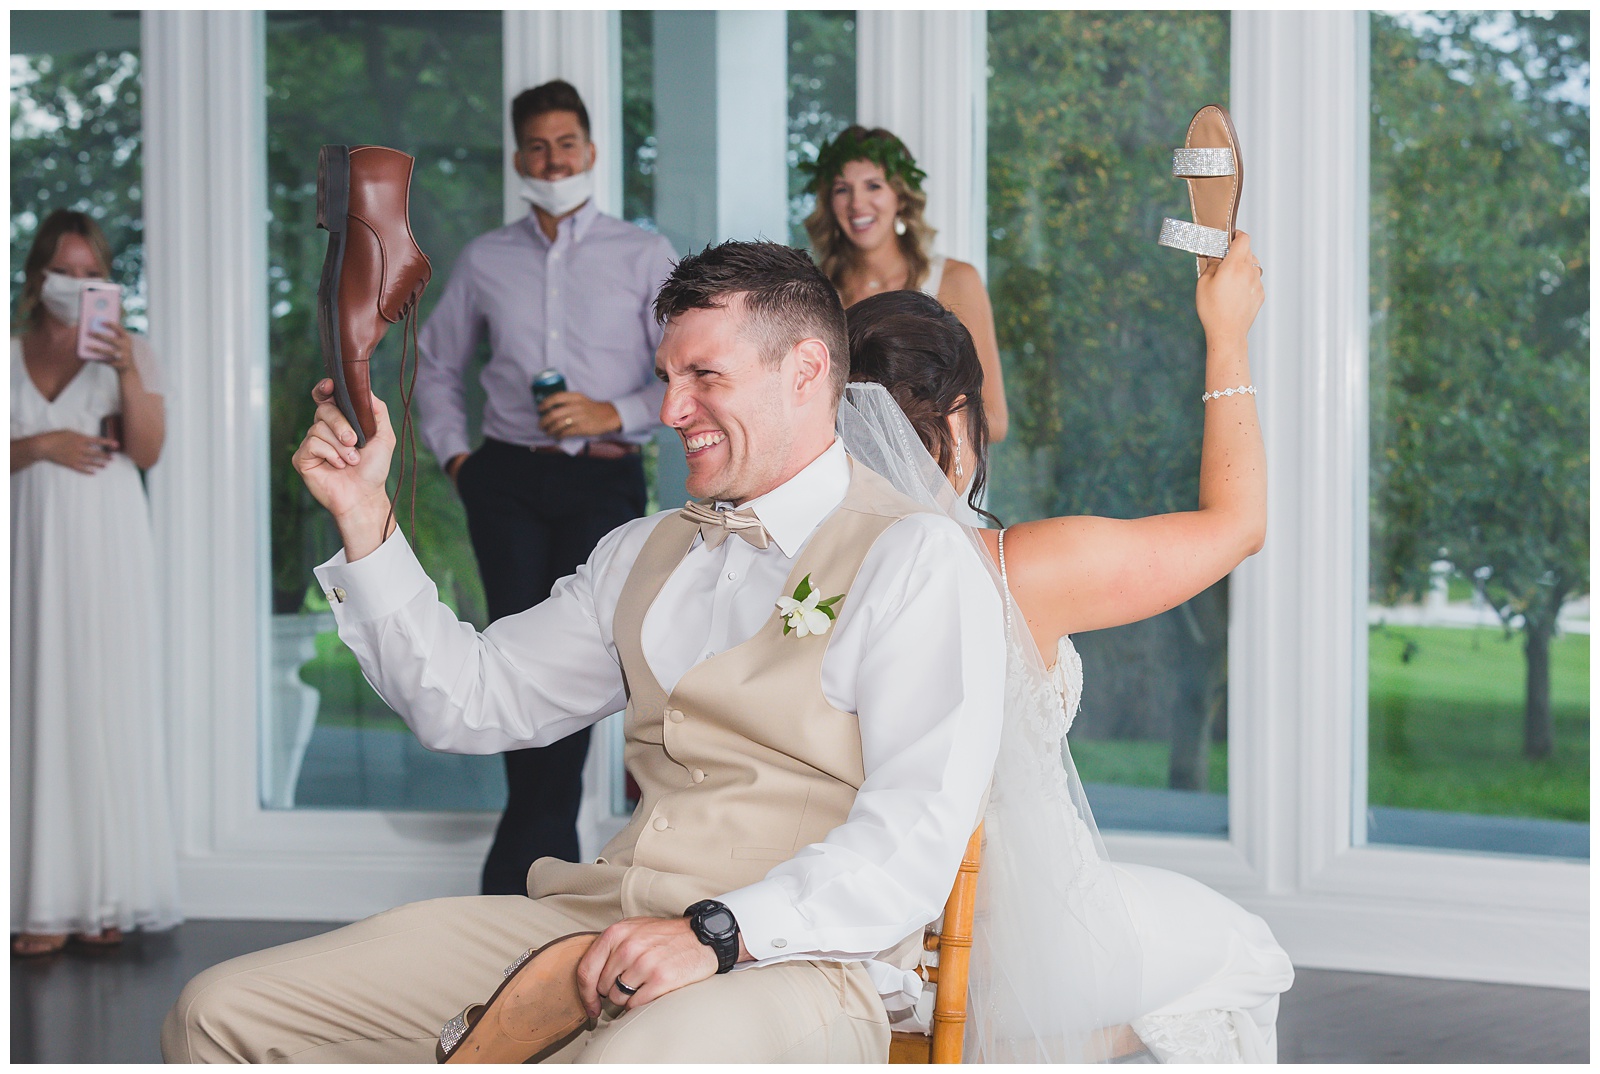 Wedding photography at Executive Hills Polo Club by Kansas City wedding photographers Wisdom-Watson Weddings.